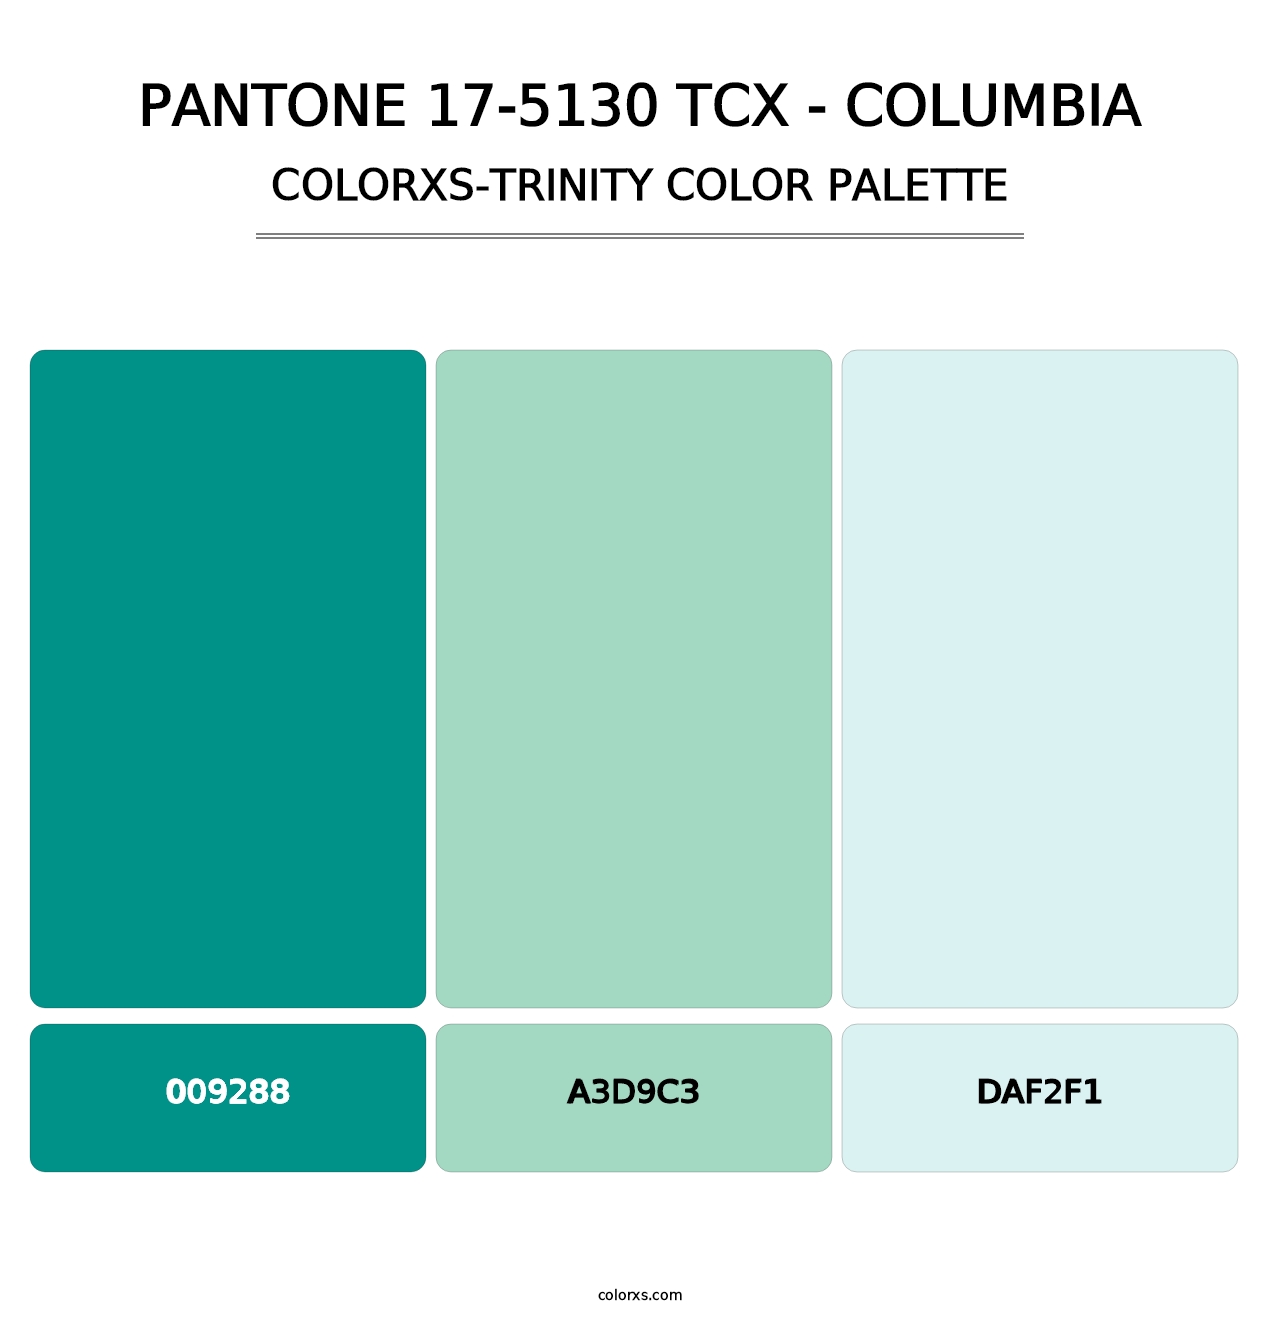 PANTONE 17-5130 TCX - Columbia - Colorxs Trinity Palette